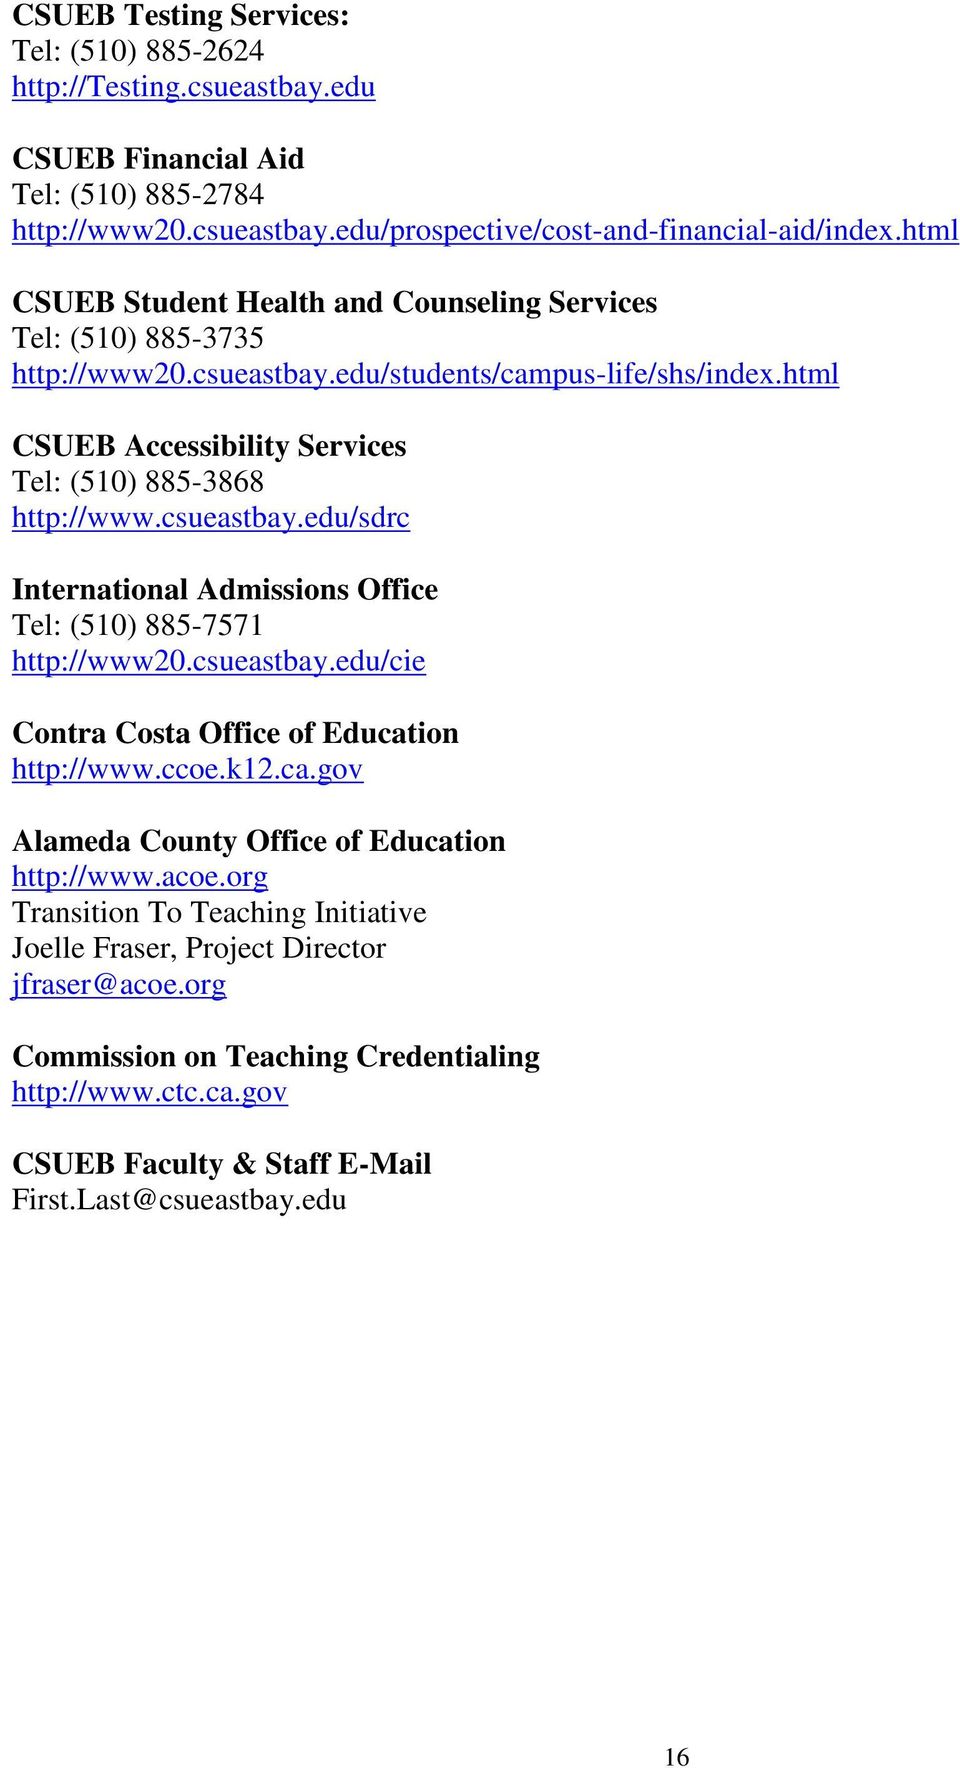 csueastbay.edu/sdrc International Admissions Office Tel: (510) 885-7571 http://www20.csueastbay.edu/cie Contra Costa Office of Education http://www.ccoe.k12.ca.gov Alameda County Office of Education http://www.